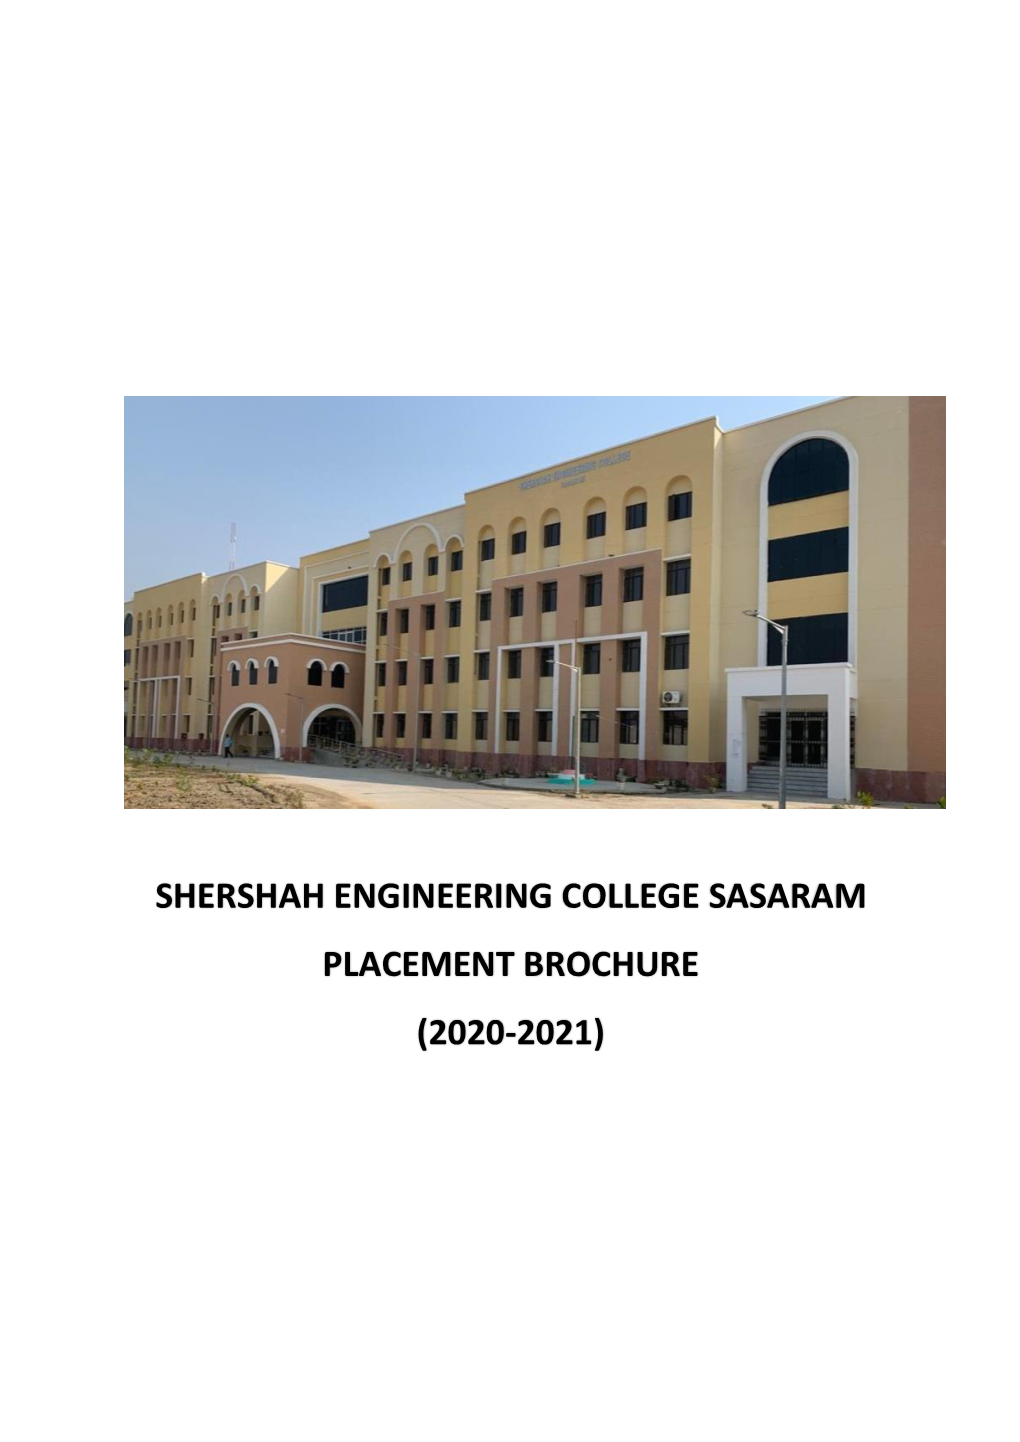 Shershah Engineering College Sasaram Placement Brochure (2020-2021)